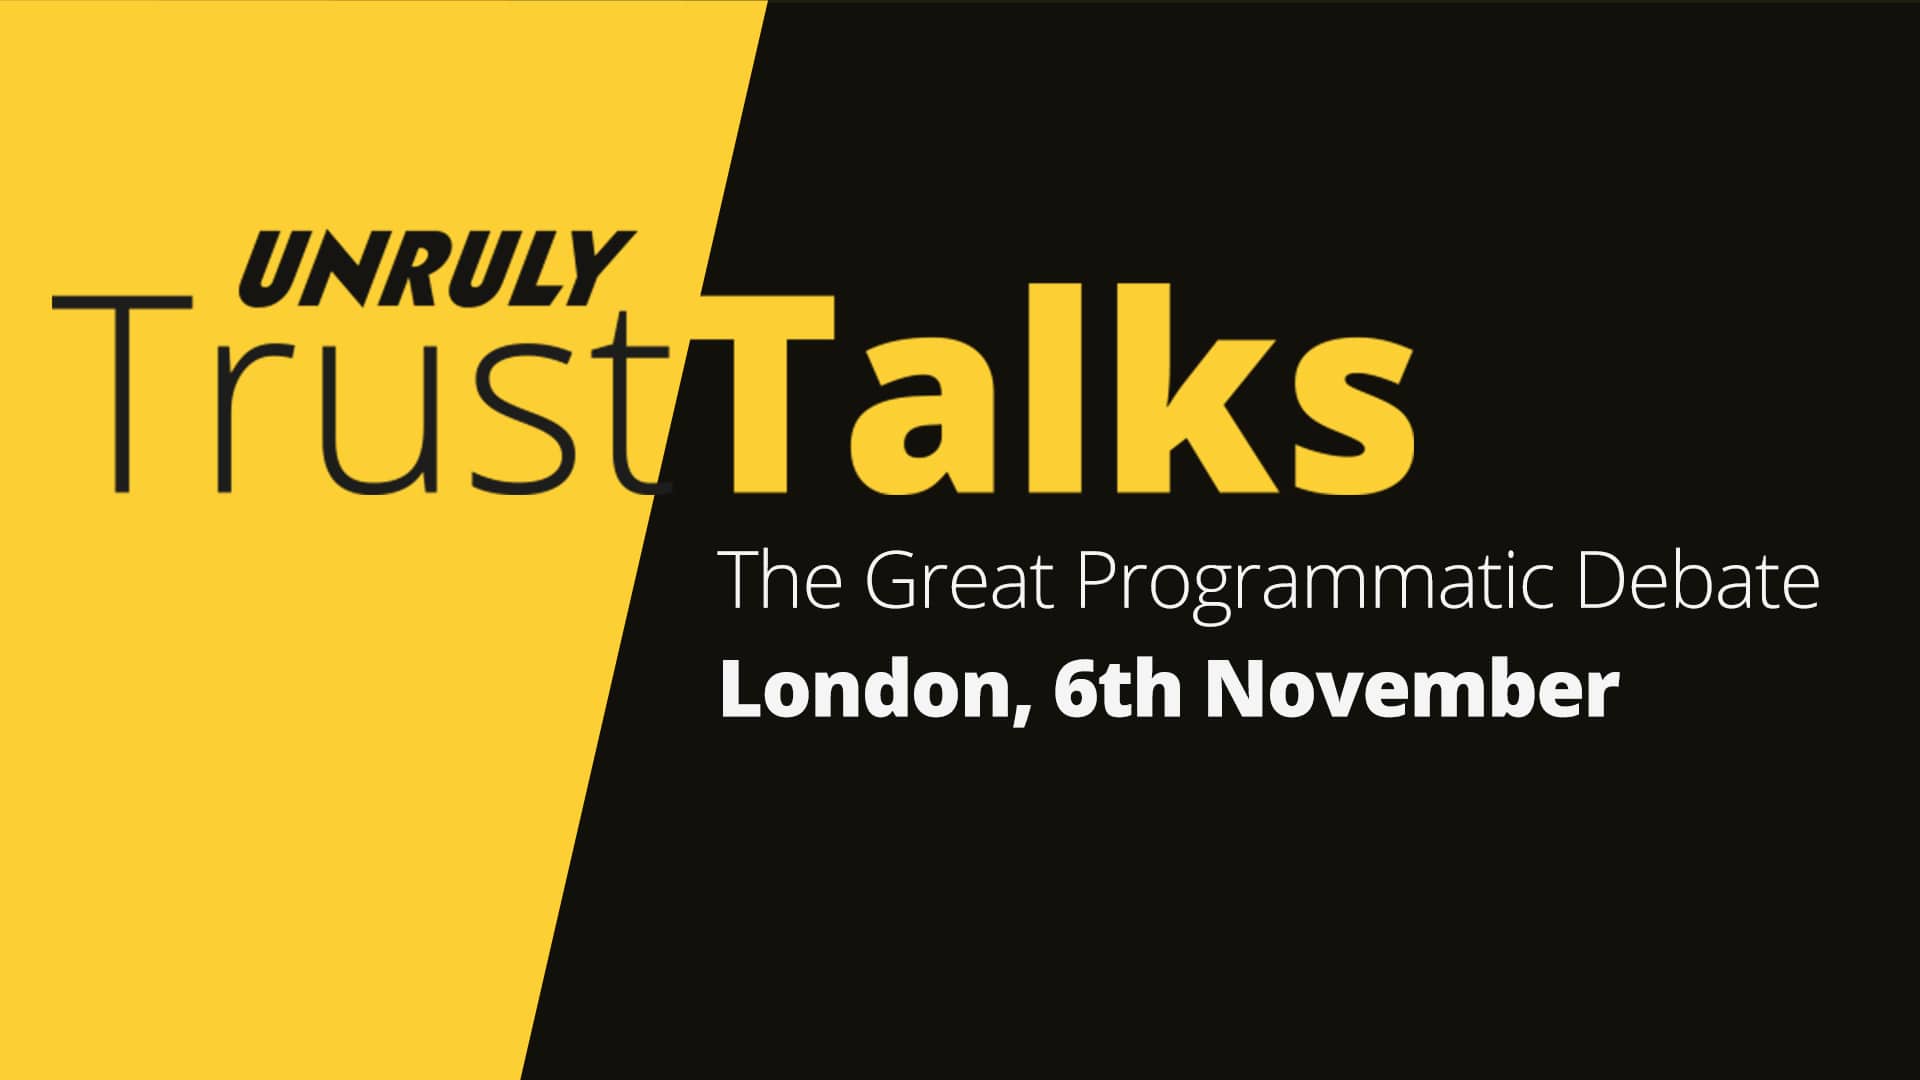 Announcing London’s Trust Talks: The Great Programmatic Debate panels